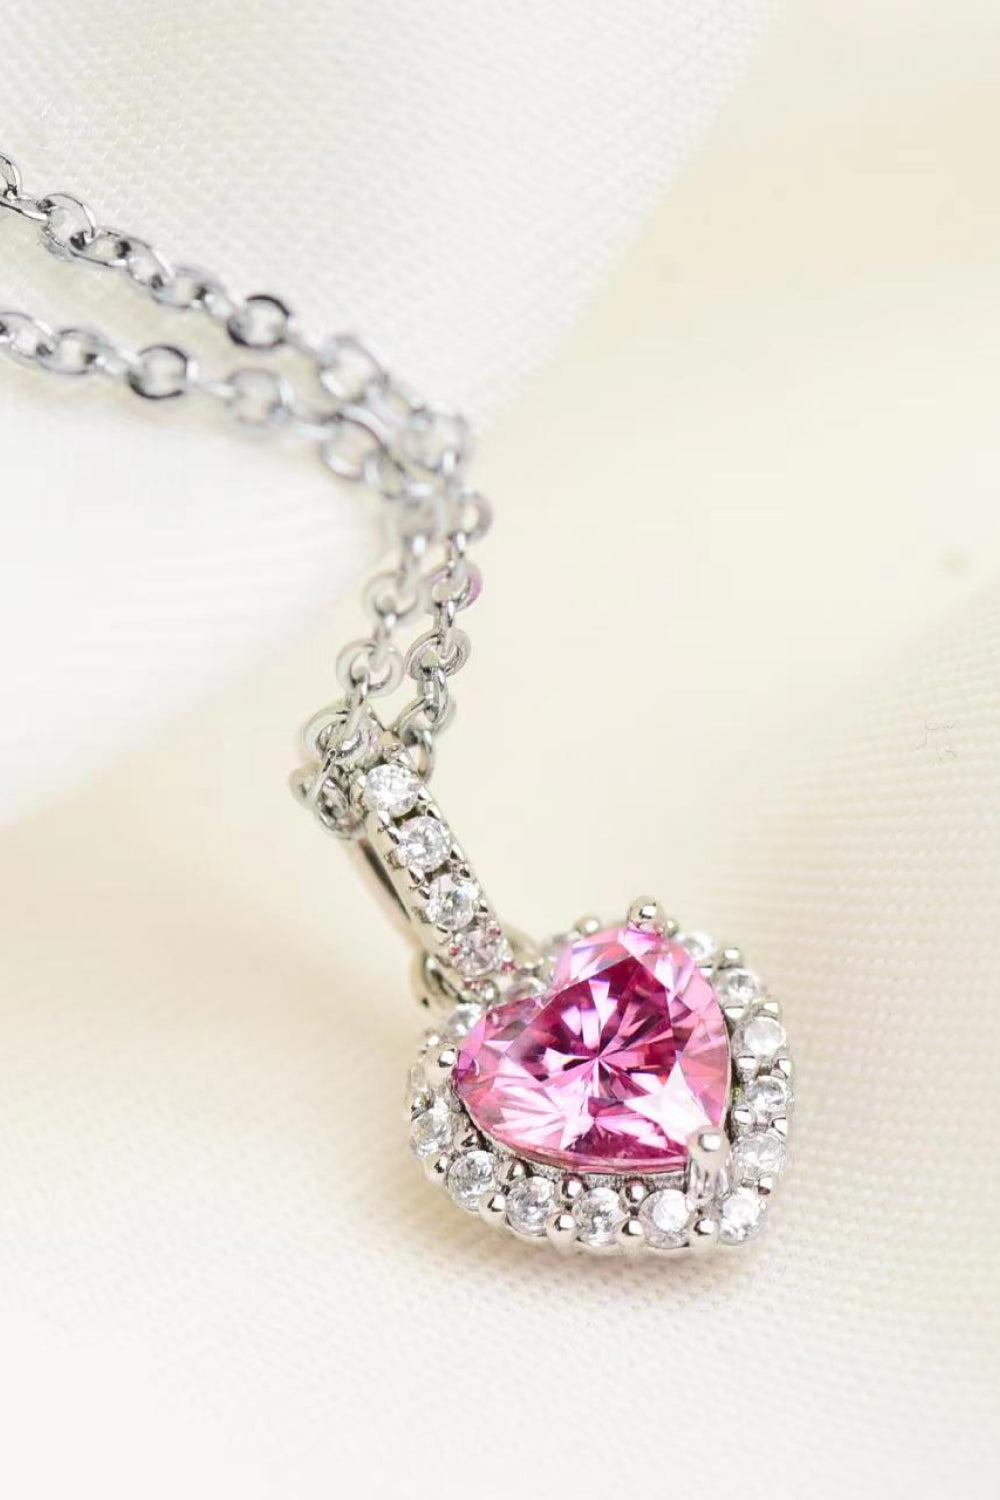 1 Carat Moissanite Heart Pendant Necklace - Sydney So Sweet